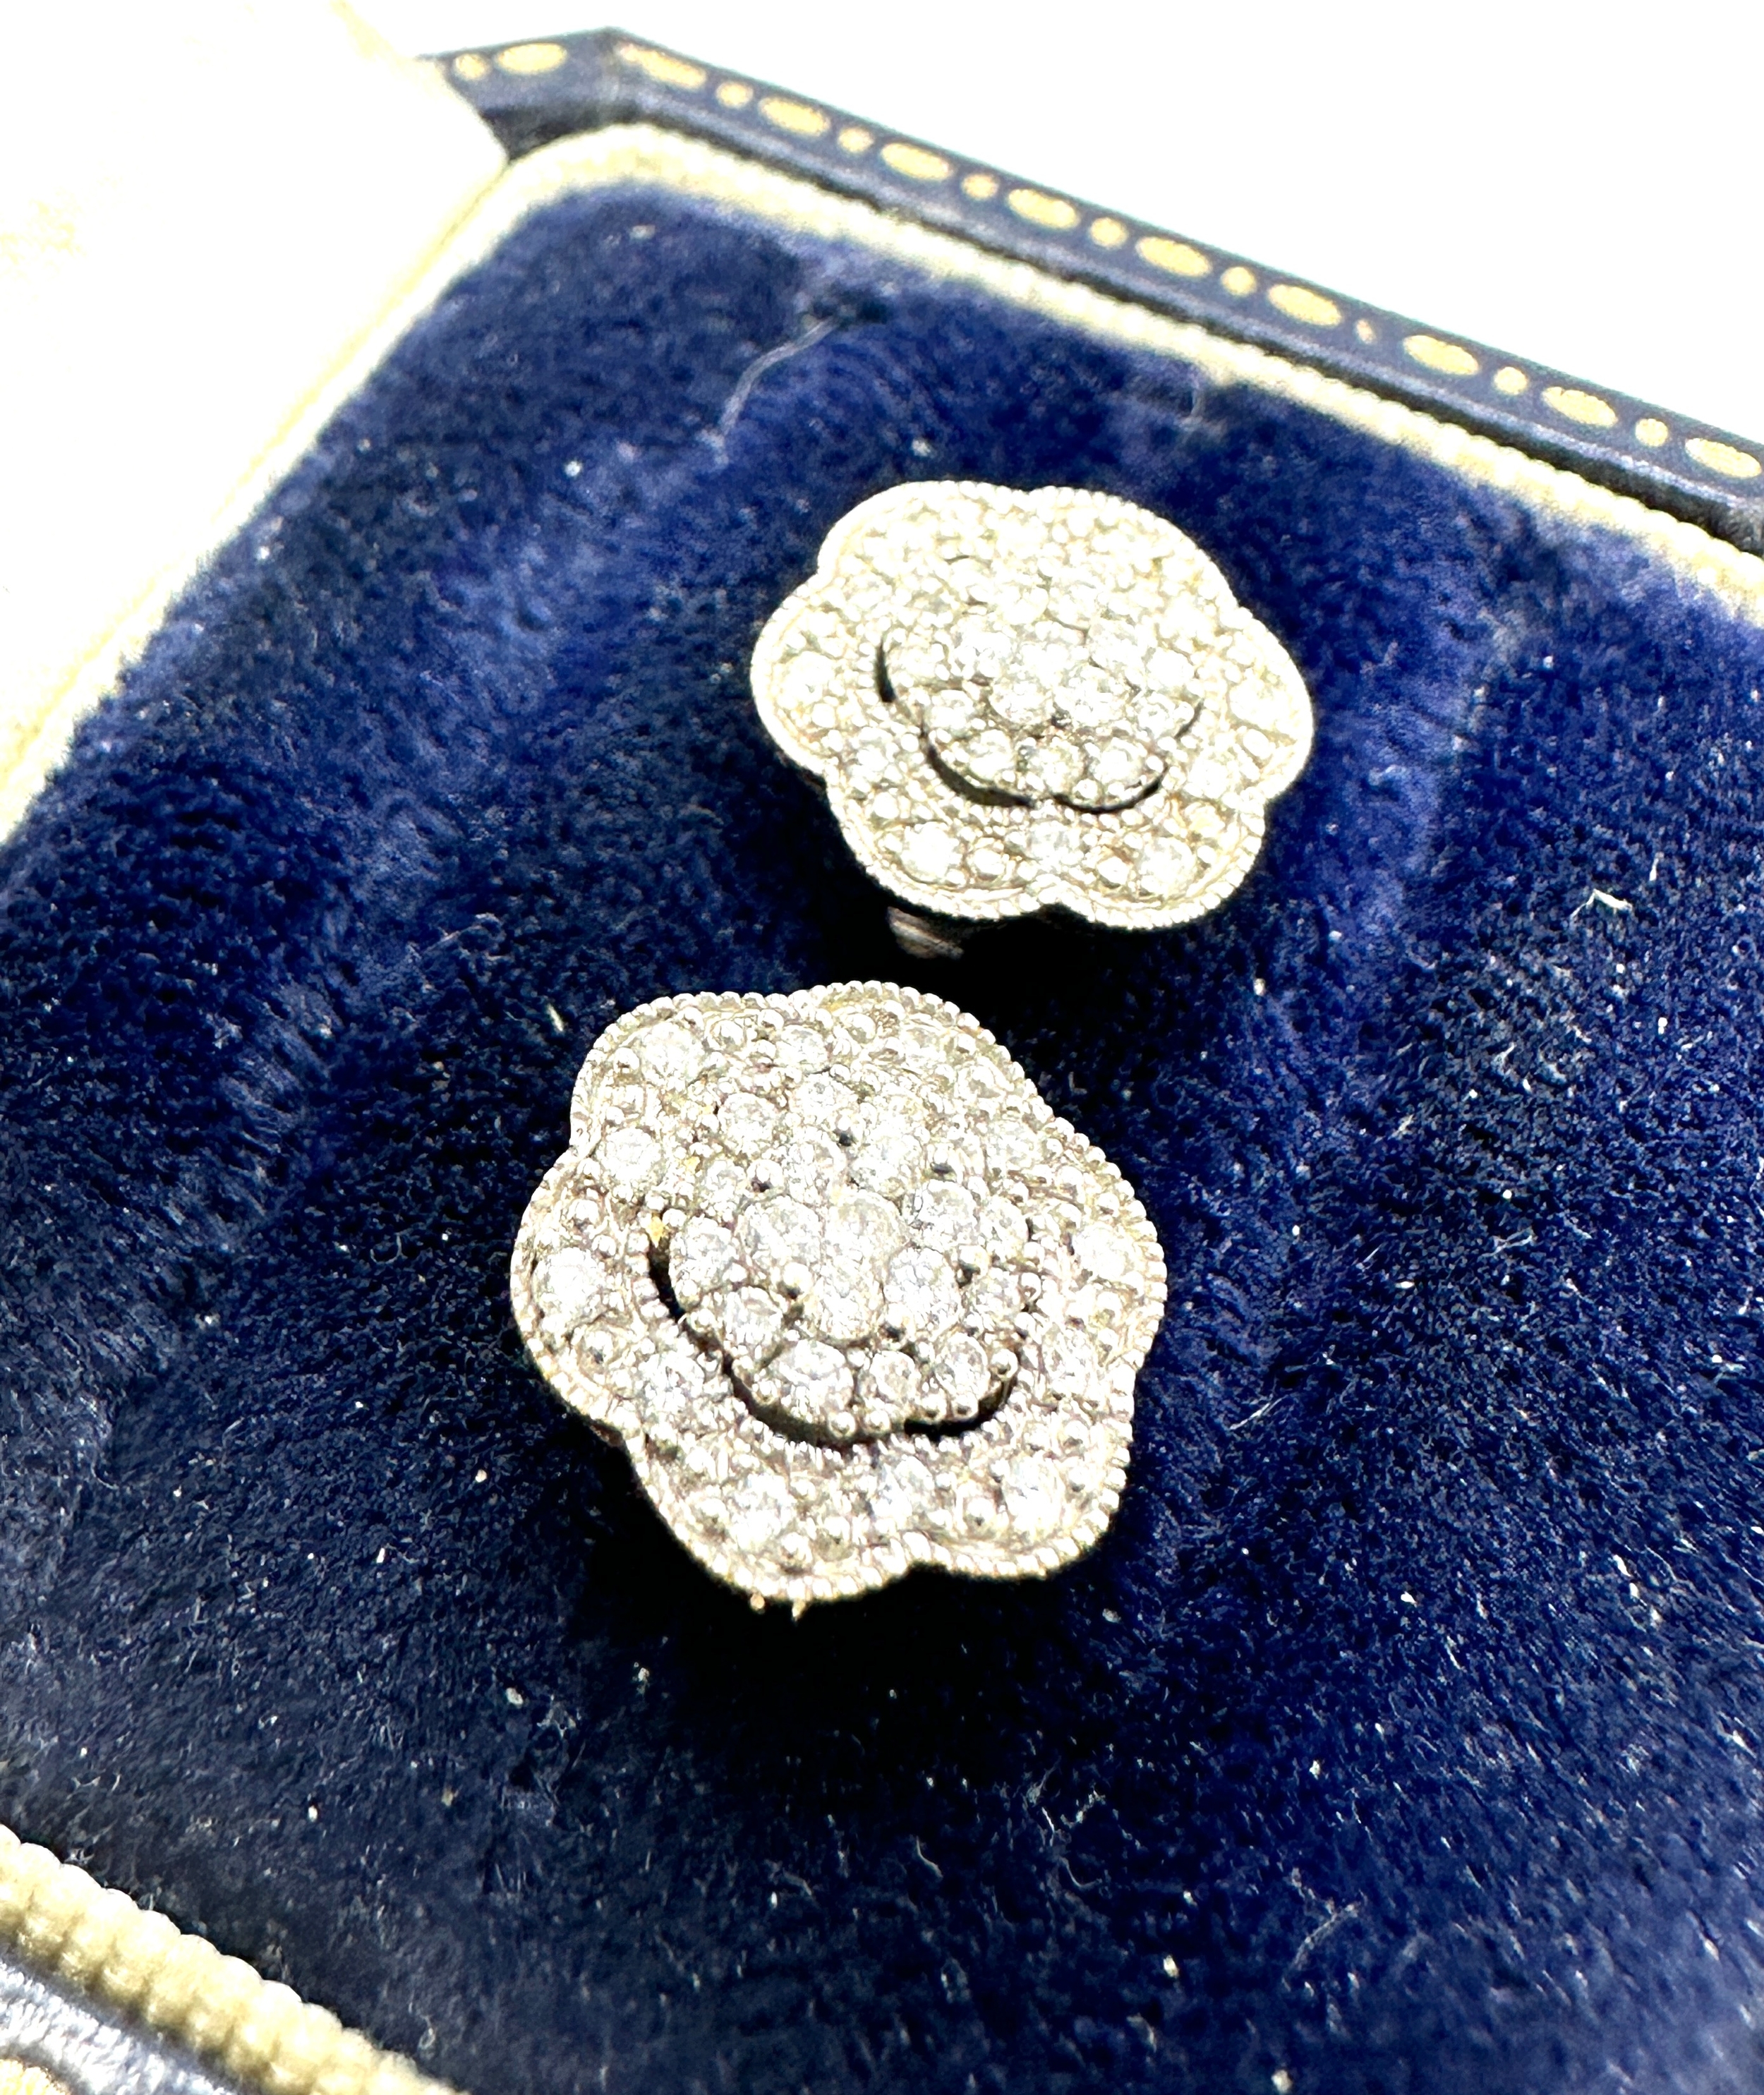 9ct gold diamond earrings .40ct diamonds weight 2.3g - Image 2 of 4